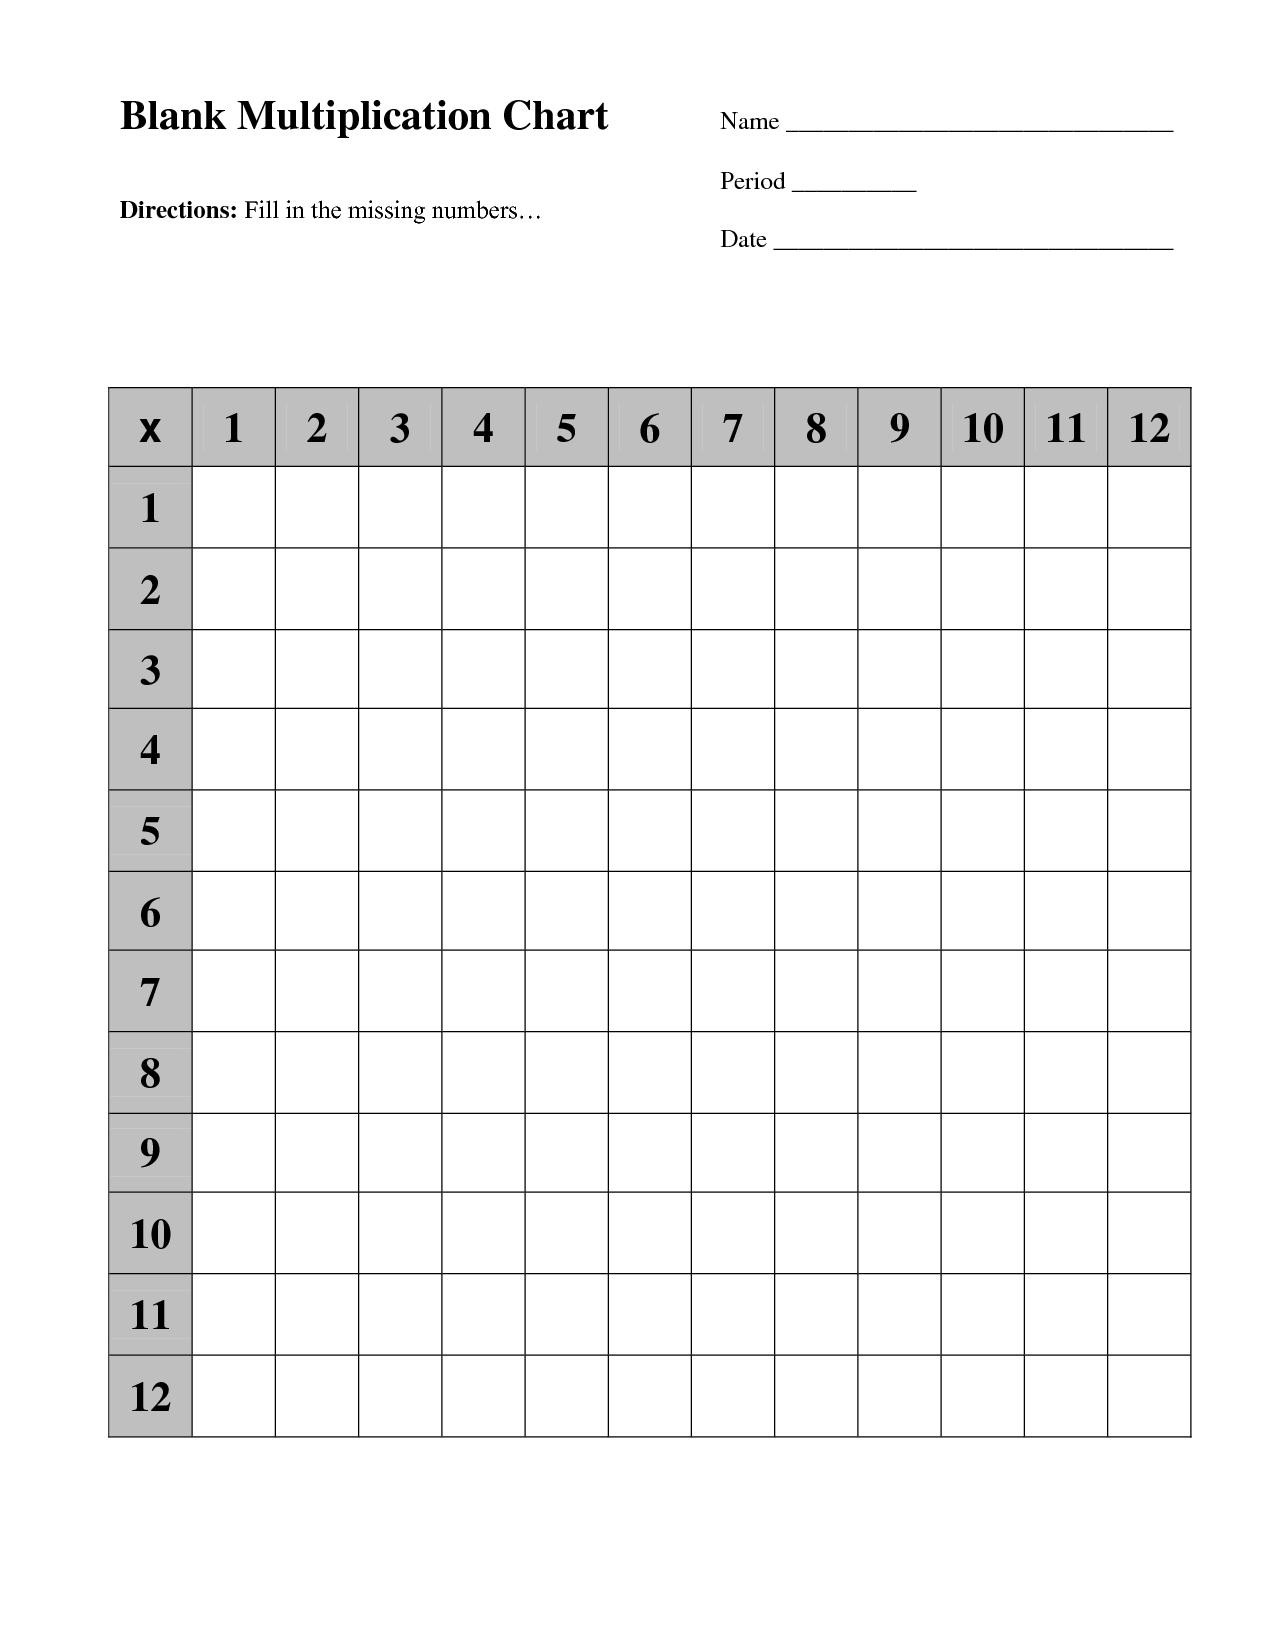 Blank Multiplication Chart 12 Image